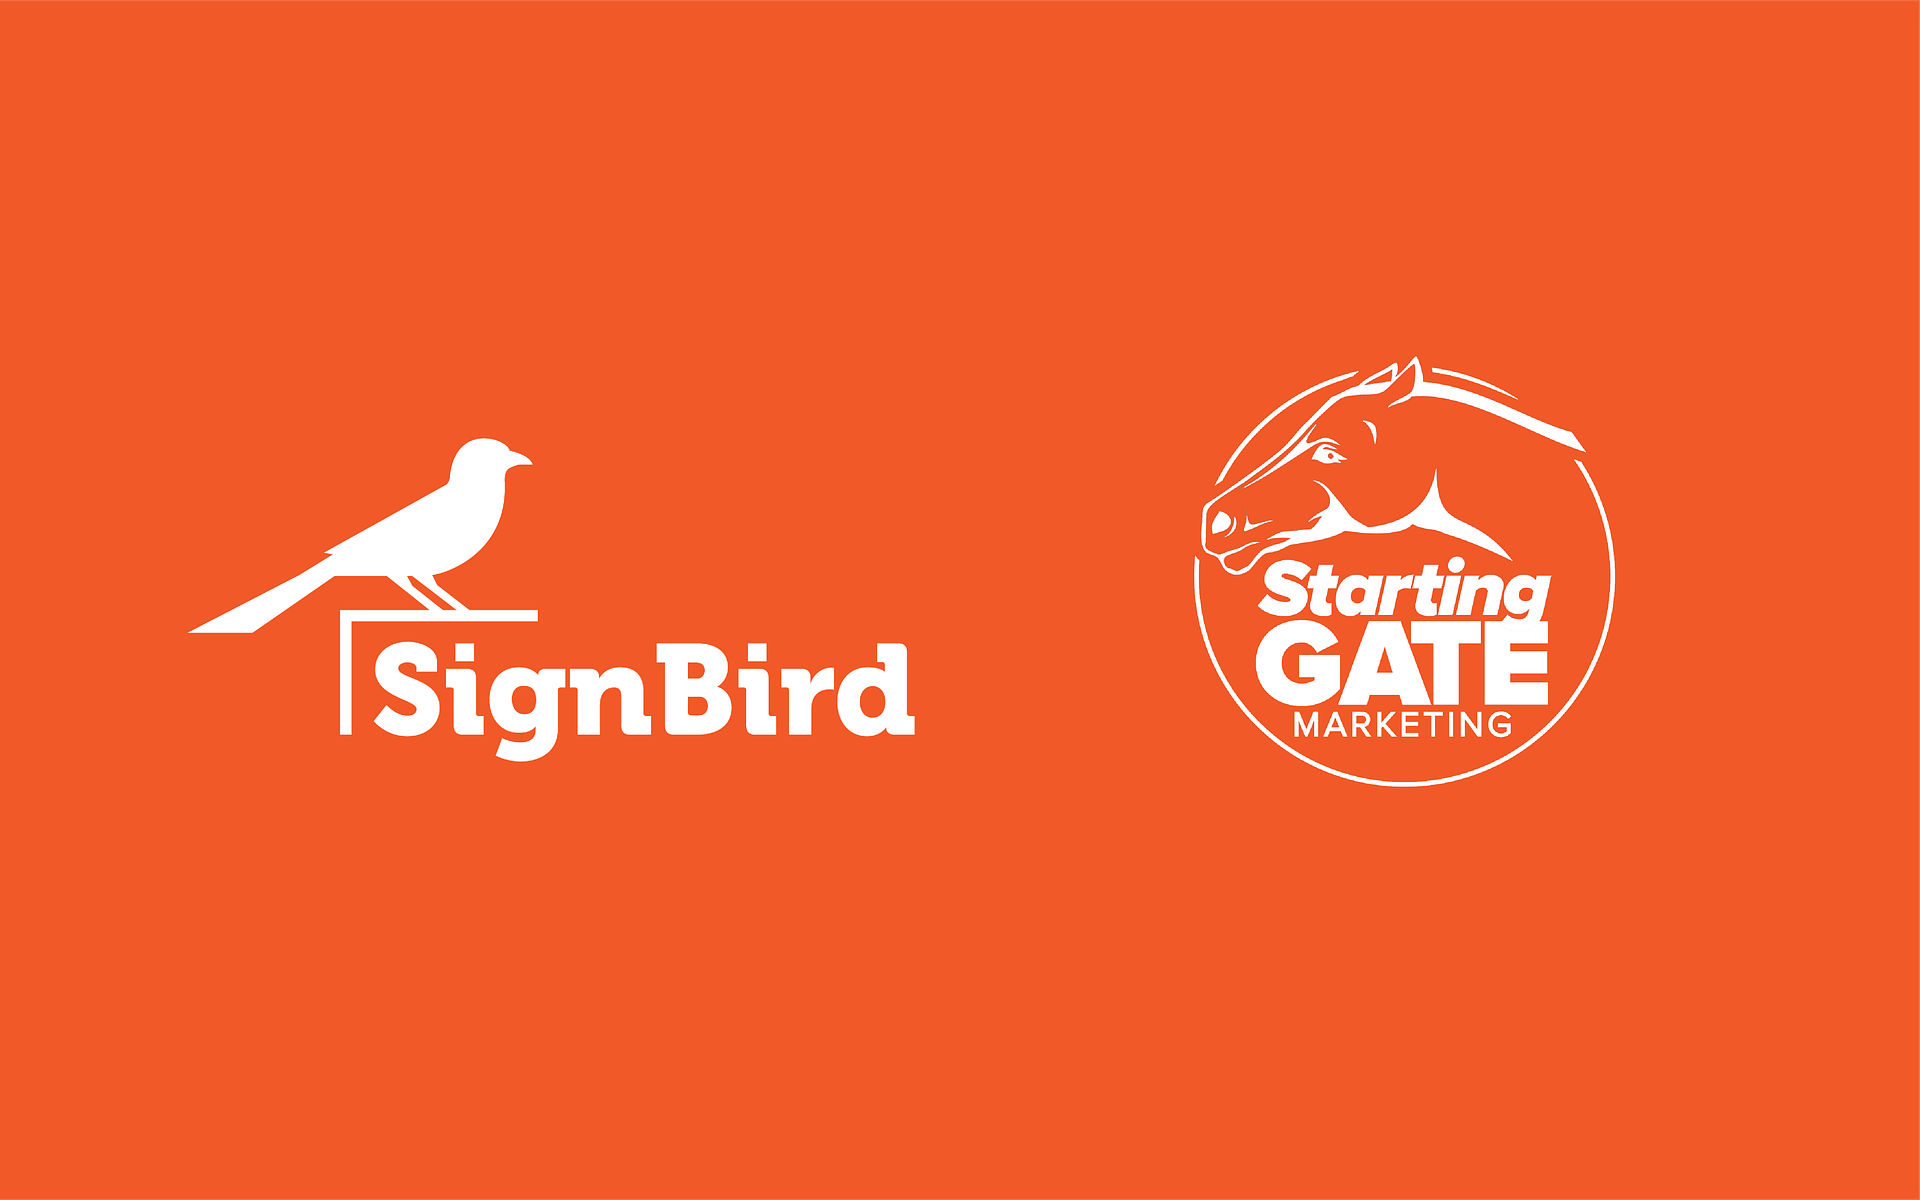 SignBird and Starting Gate Marketing